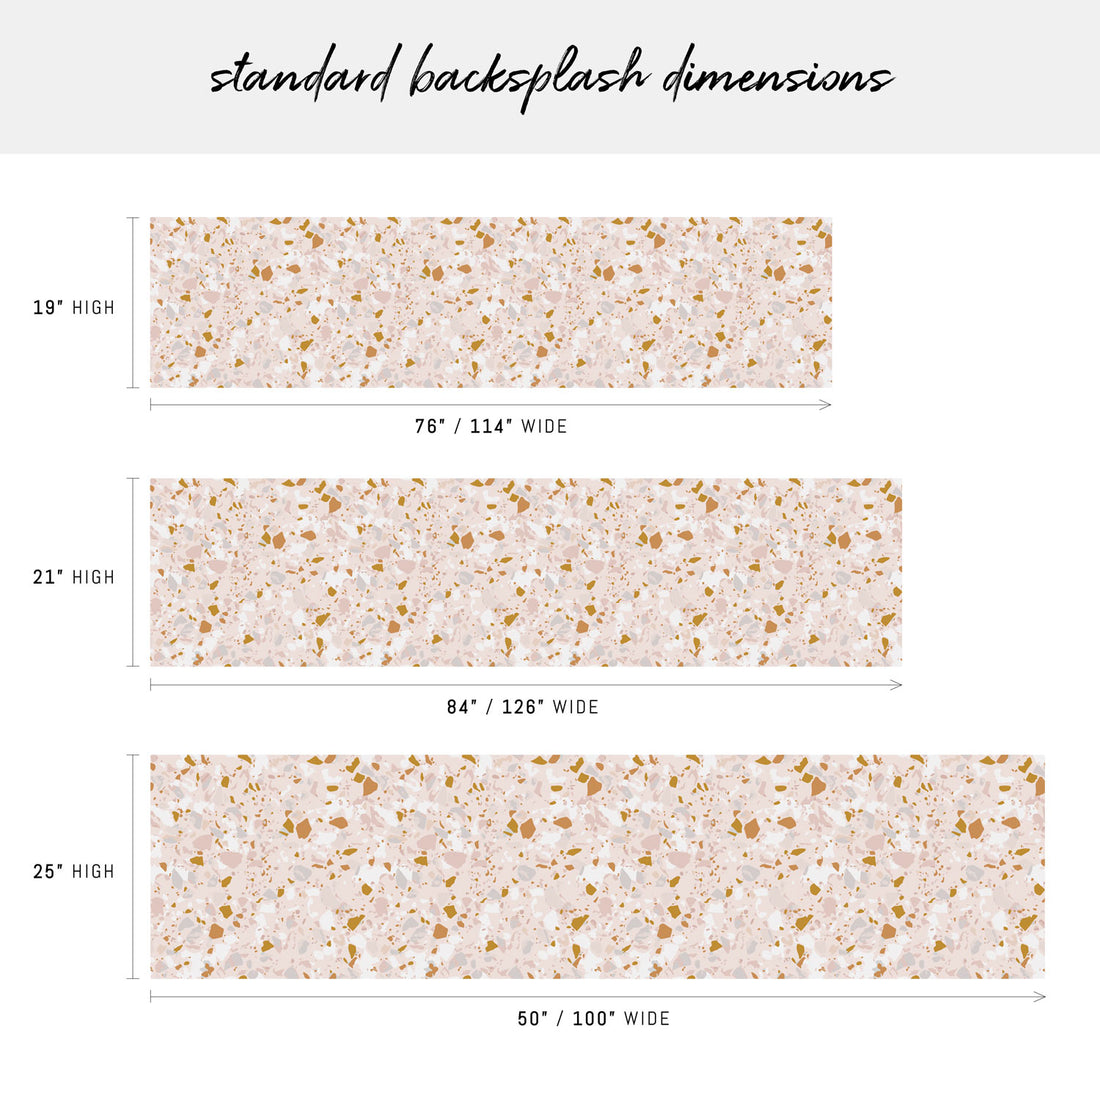 peel and stick backsplash dimensions for terrazzo pink stone